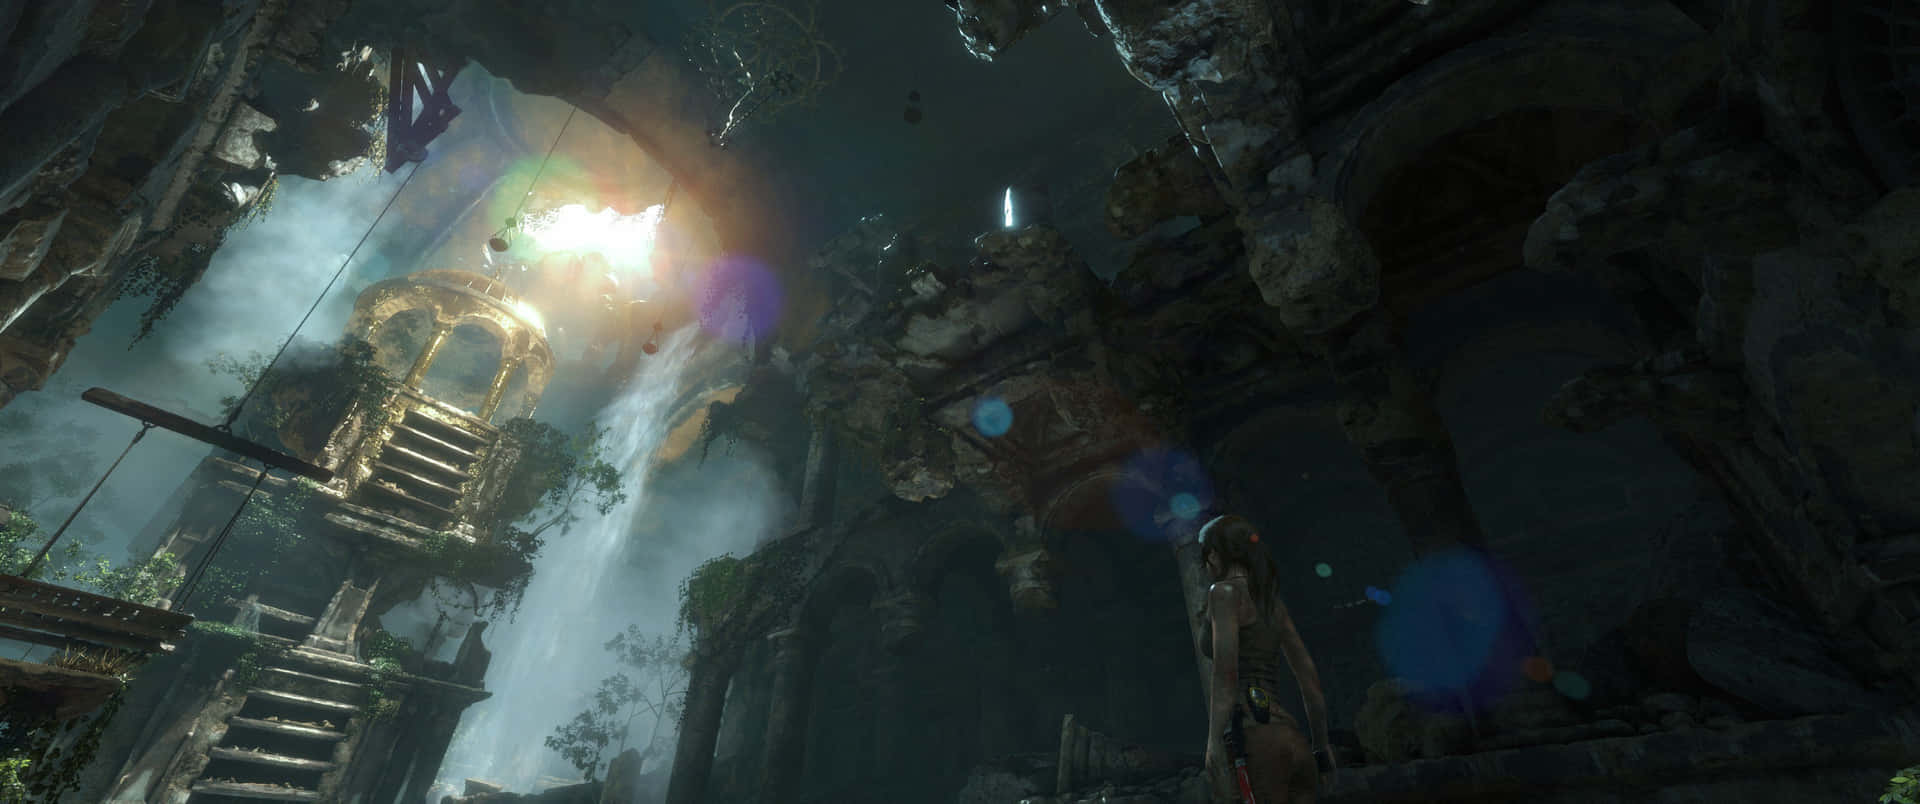 Profetensgrav 3440x1440p Rise Of The Tomb Raider Bakgrund.